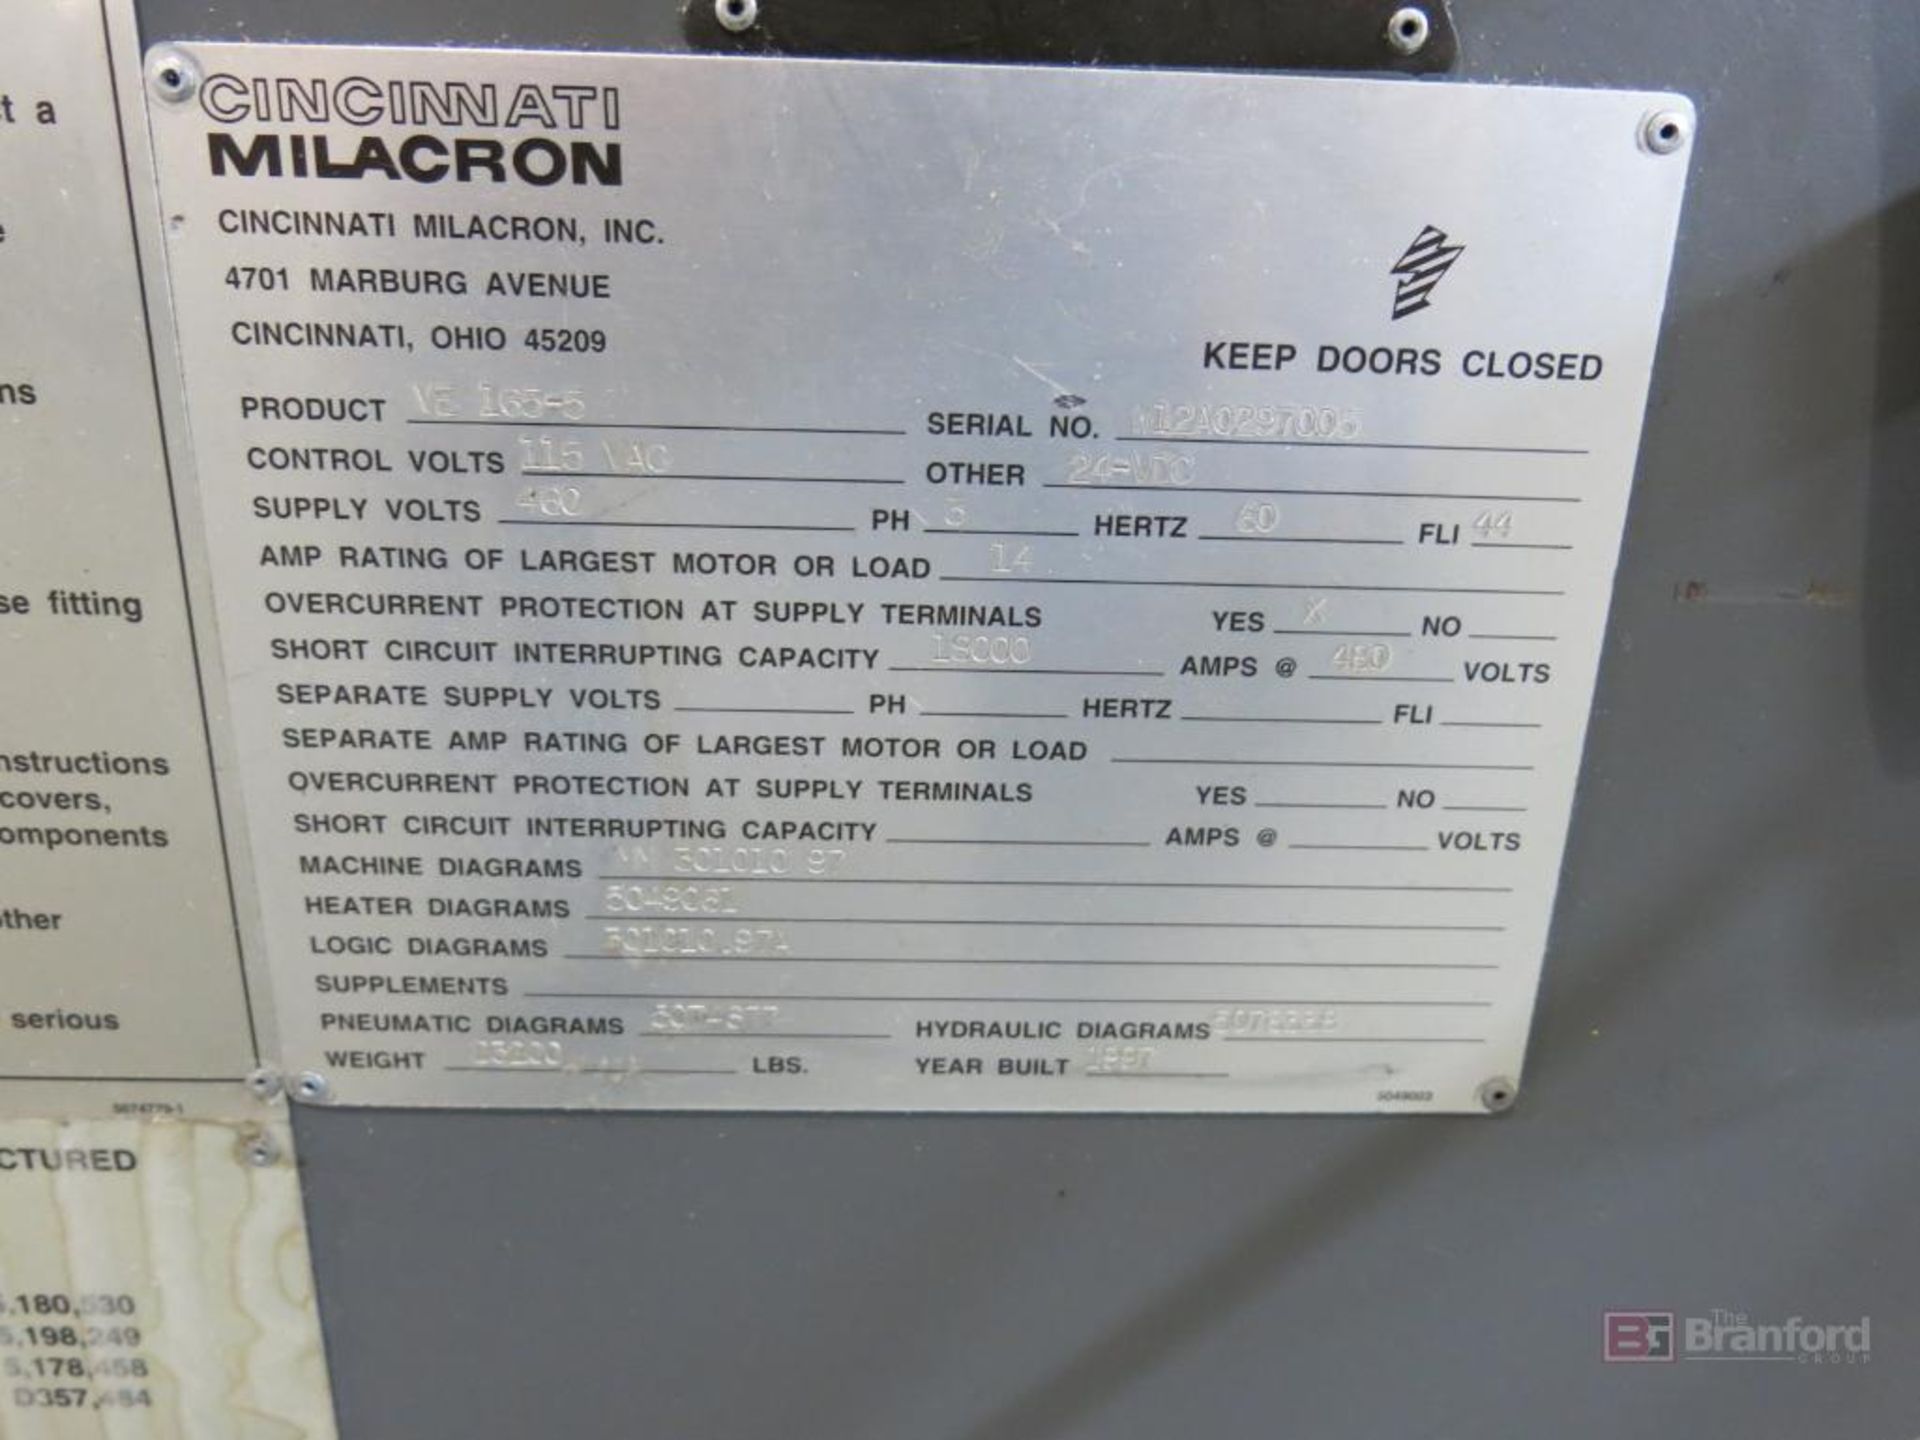 Cincinnati Milacron Elektra Injection Molding Machine - Image 6 of 11